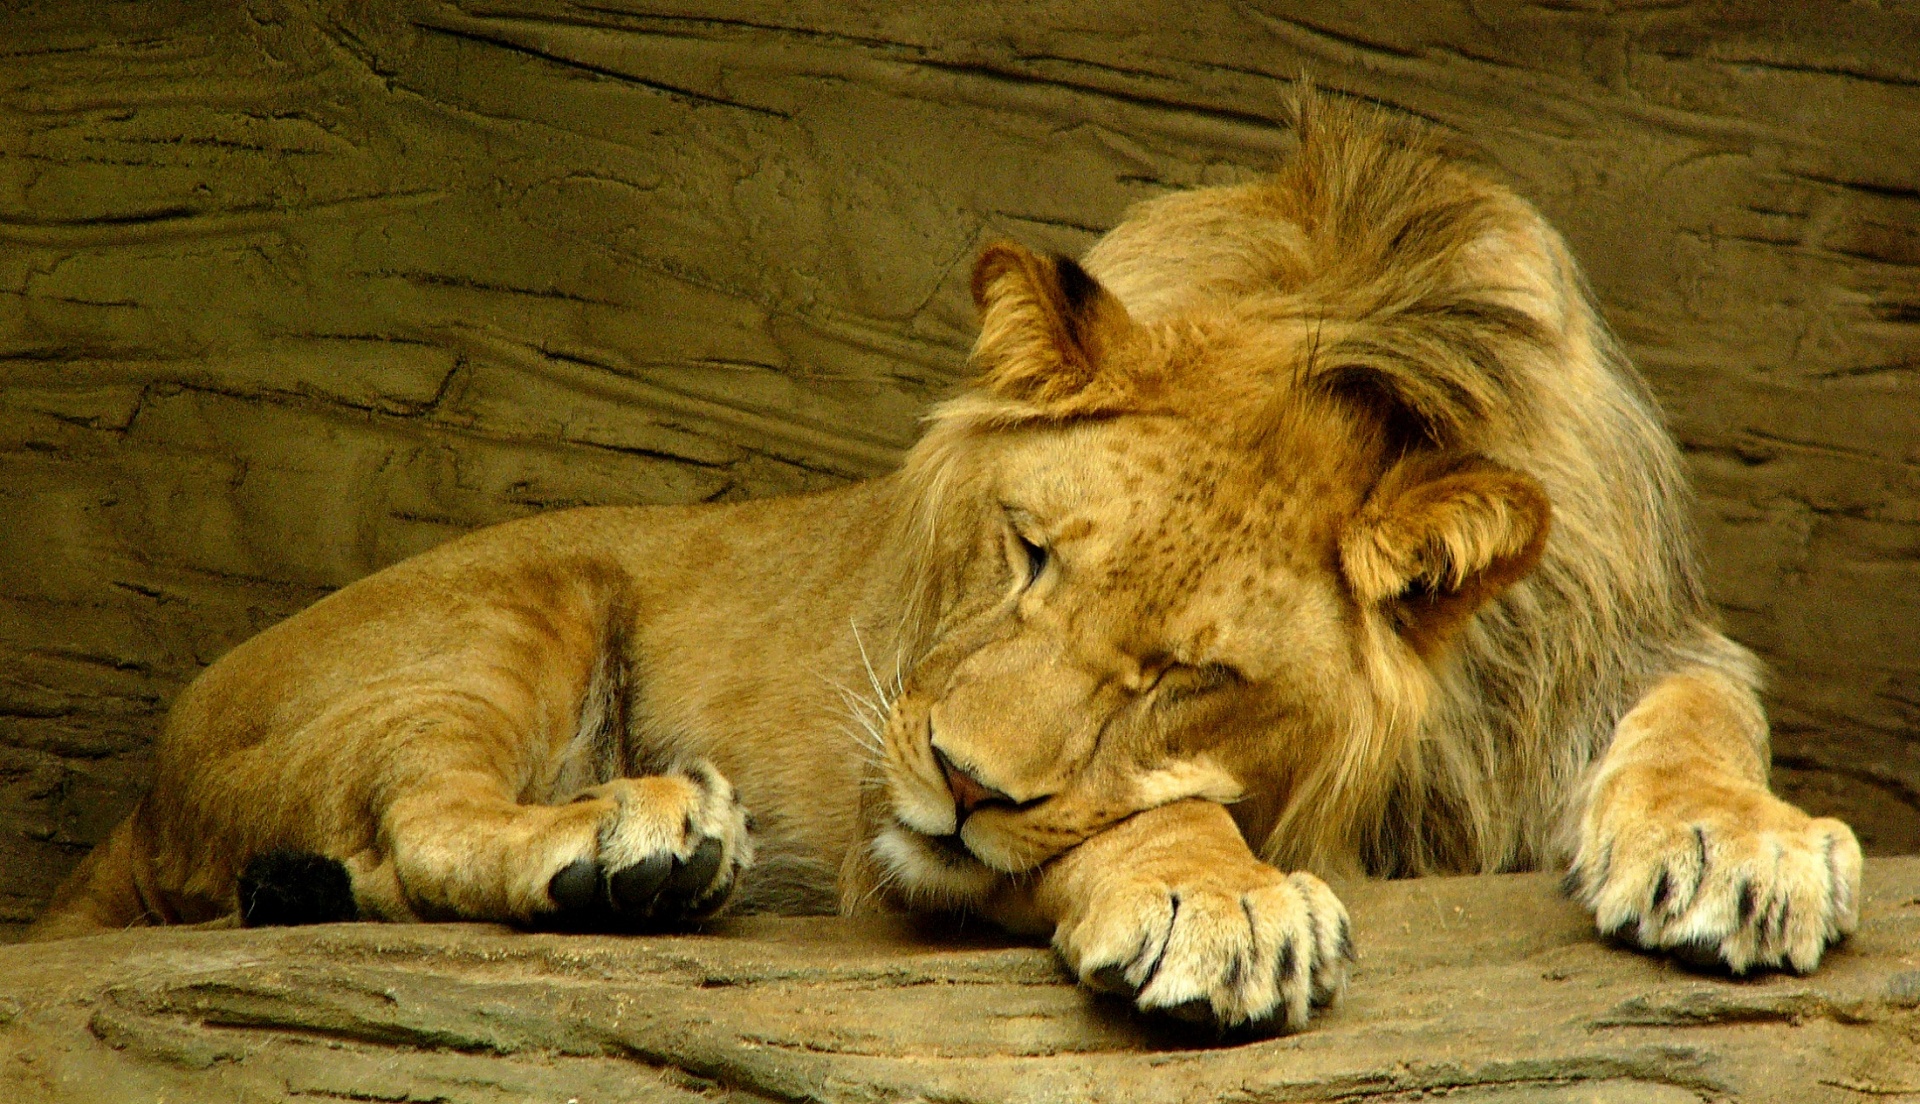 King Of The Jungle Sleeping